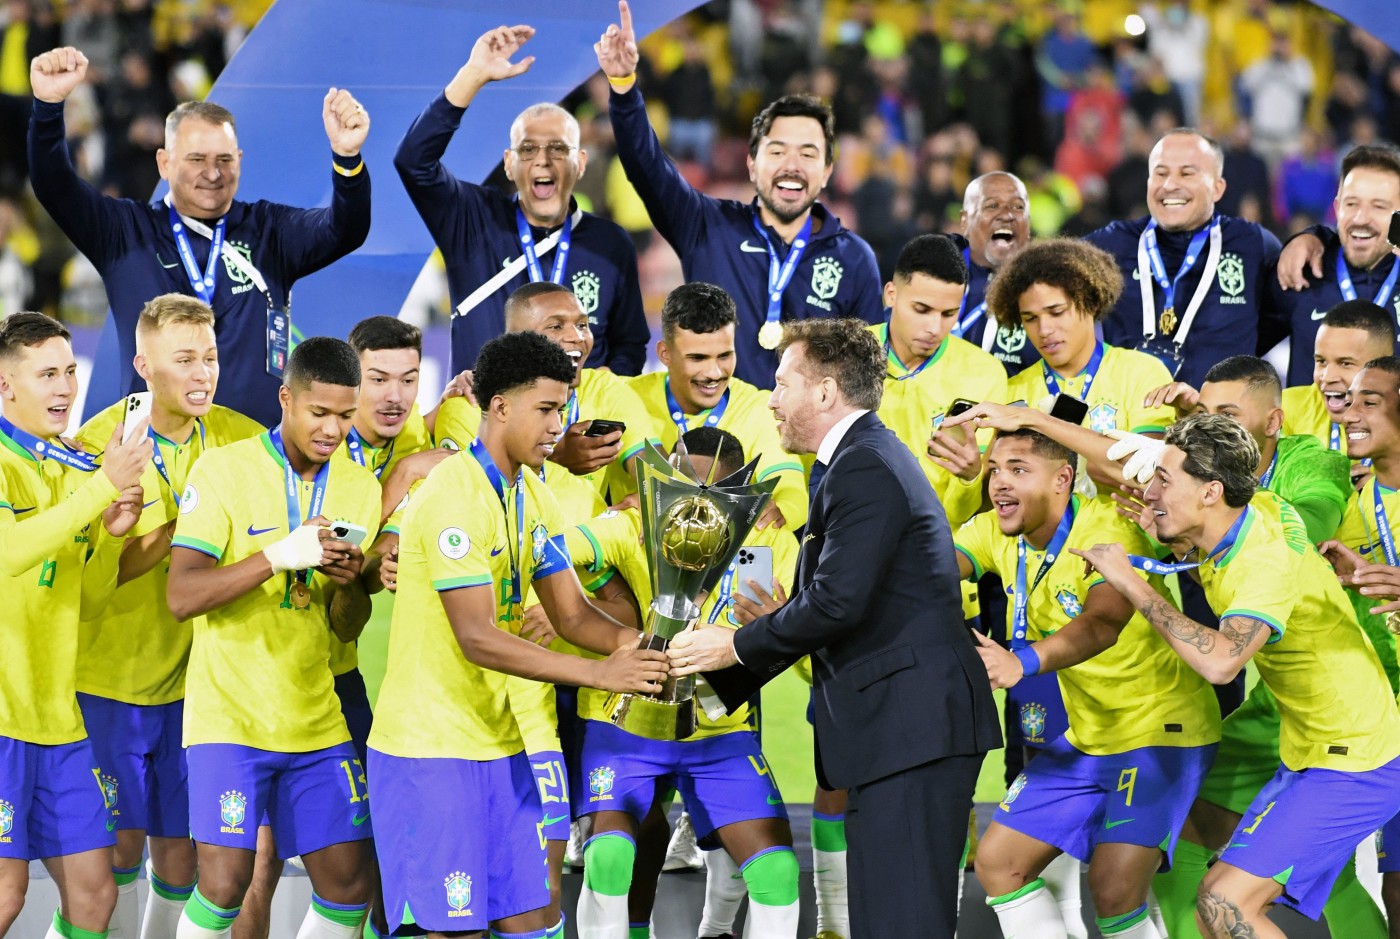 Santos wins Under-20 CONMEBOL Championship, News, Official Site